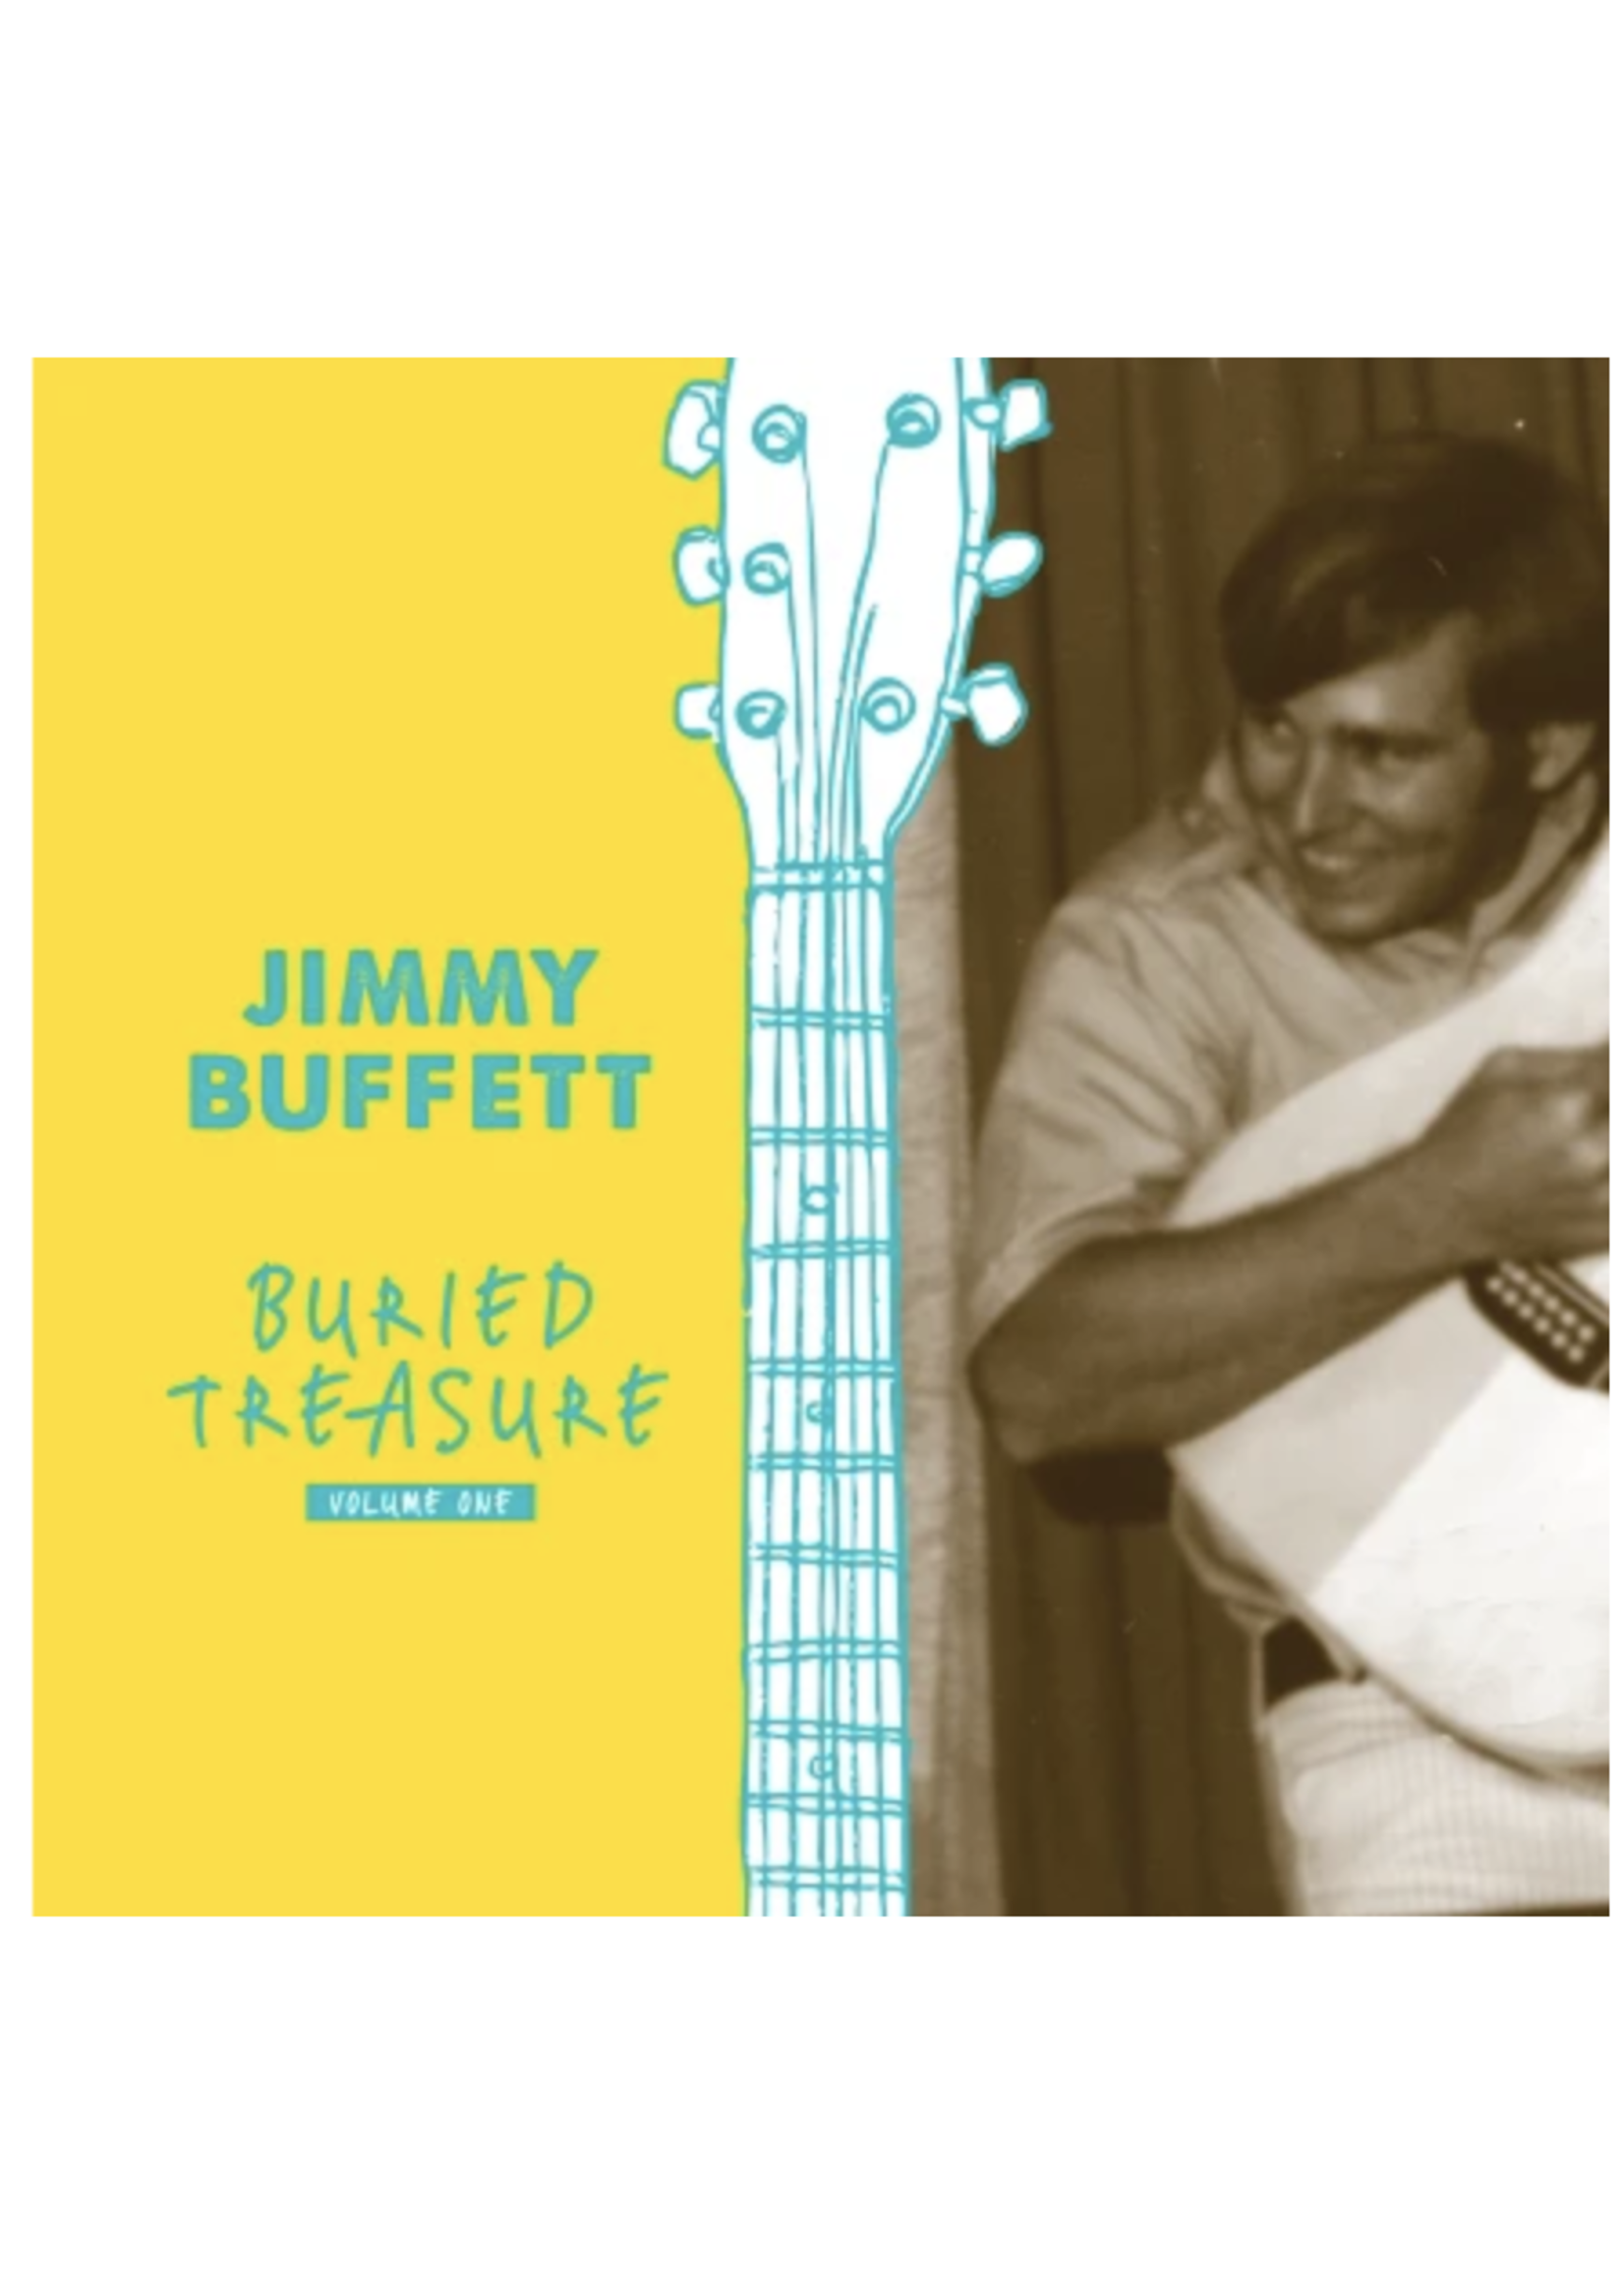 Jimmy Buffett Buried Treasure: Volume One (2 Lp's)